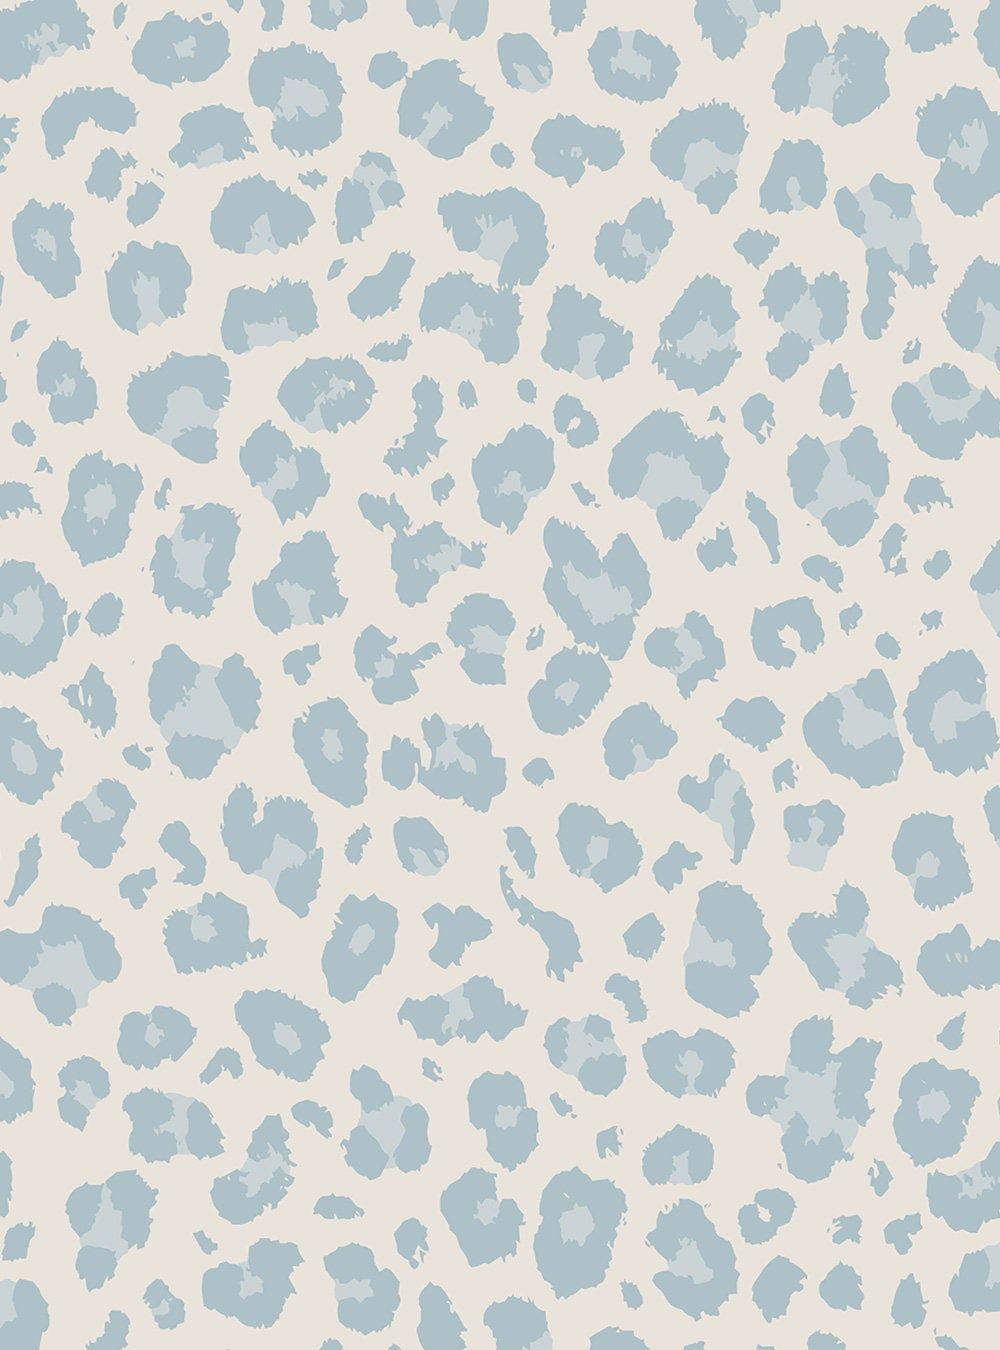 Elegance of Wilderness in Grayscale - Cheetah Print in Pale Gray Wallpaper